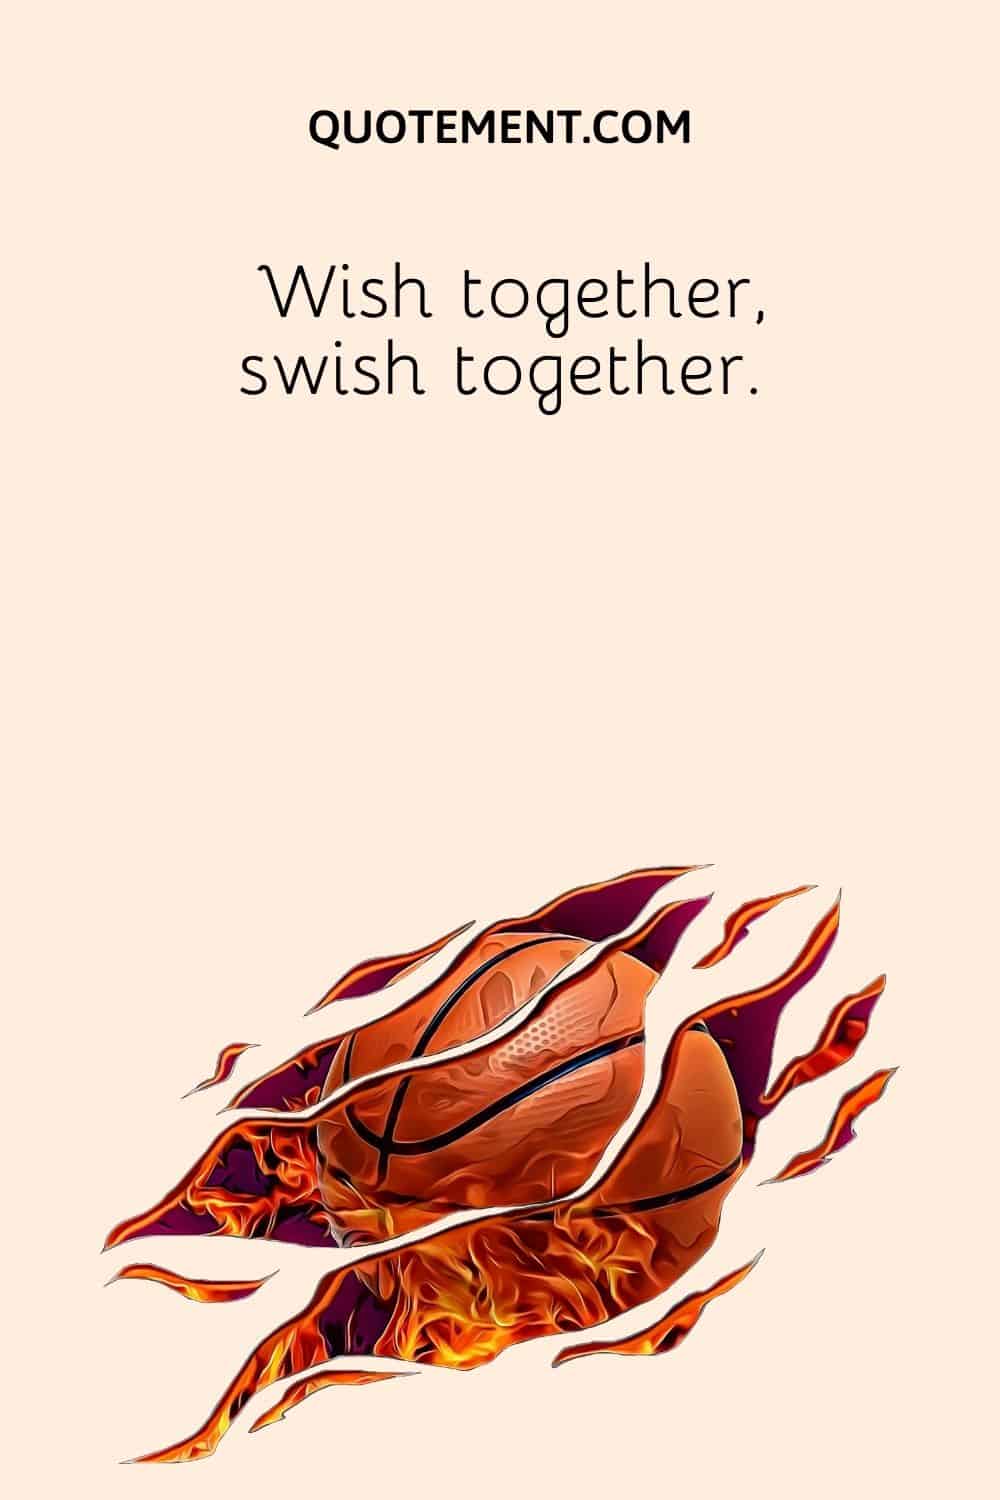 Wish together, swish together